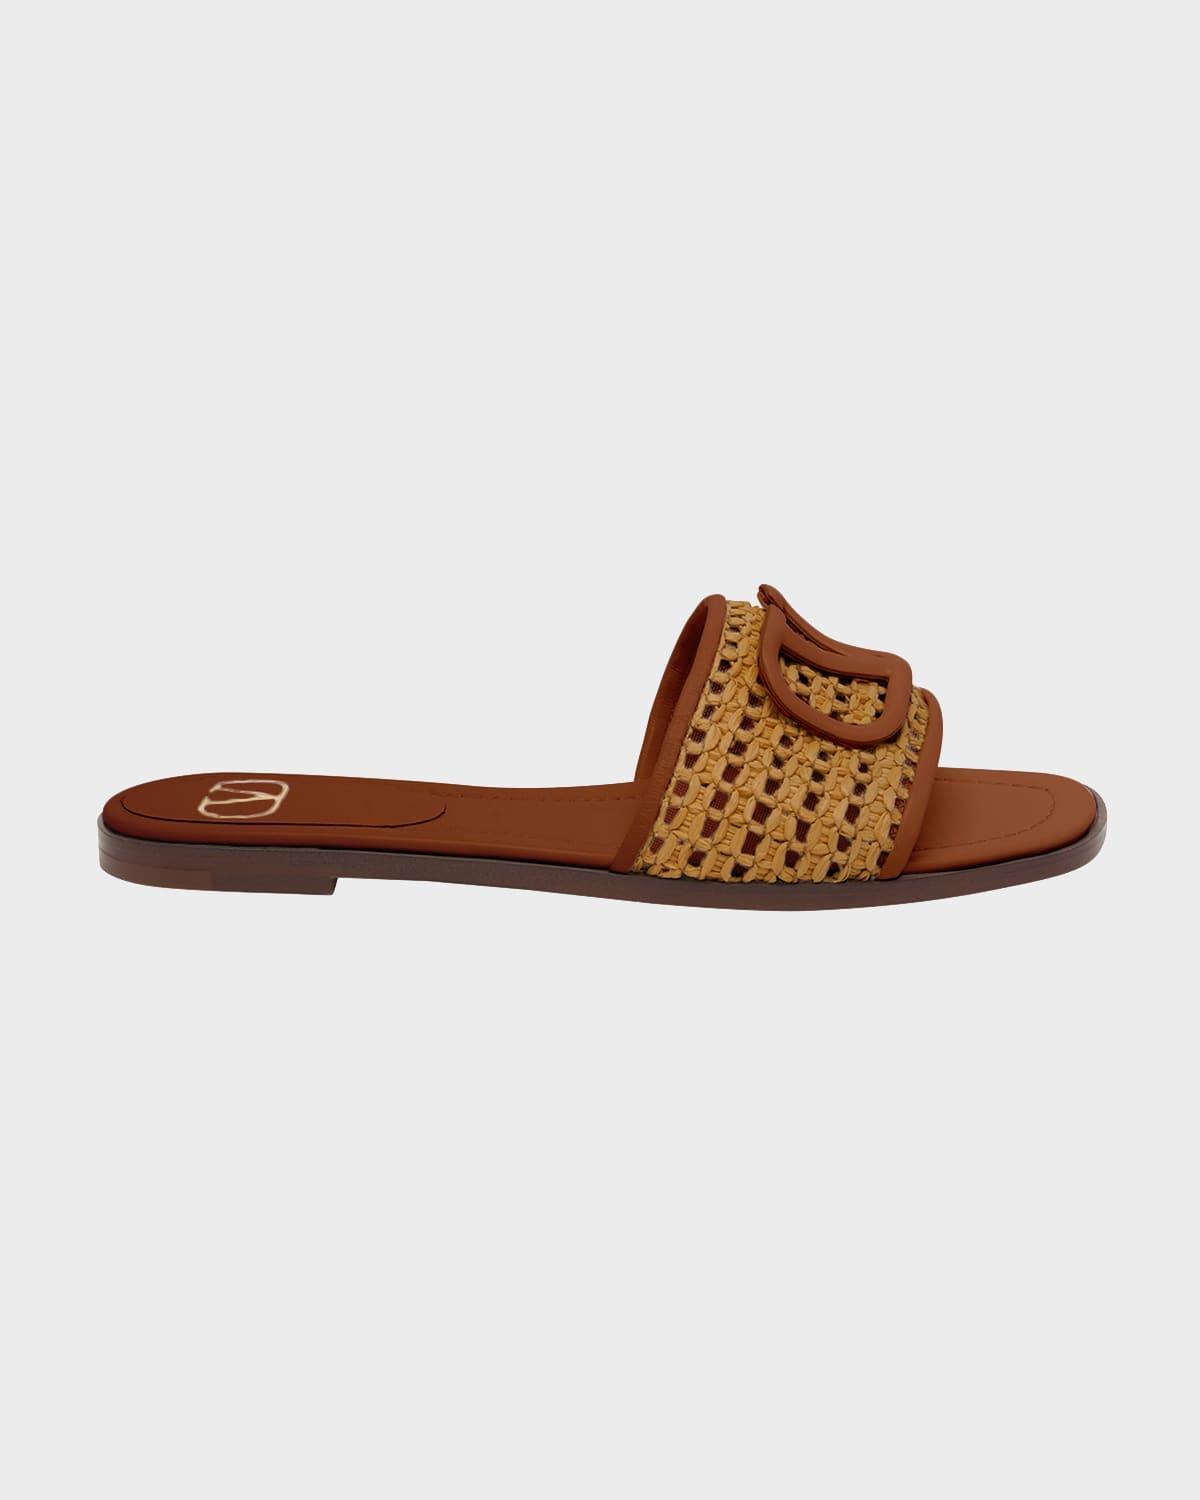 Valentino Garavani Womens Embellished Slip On Slide Sandals Product Image